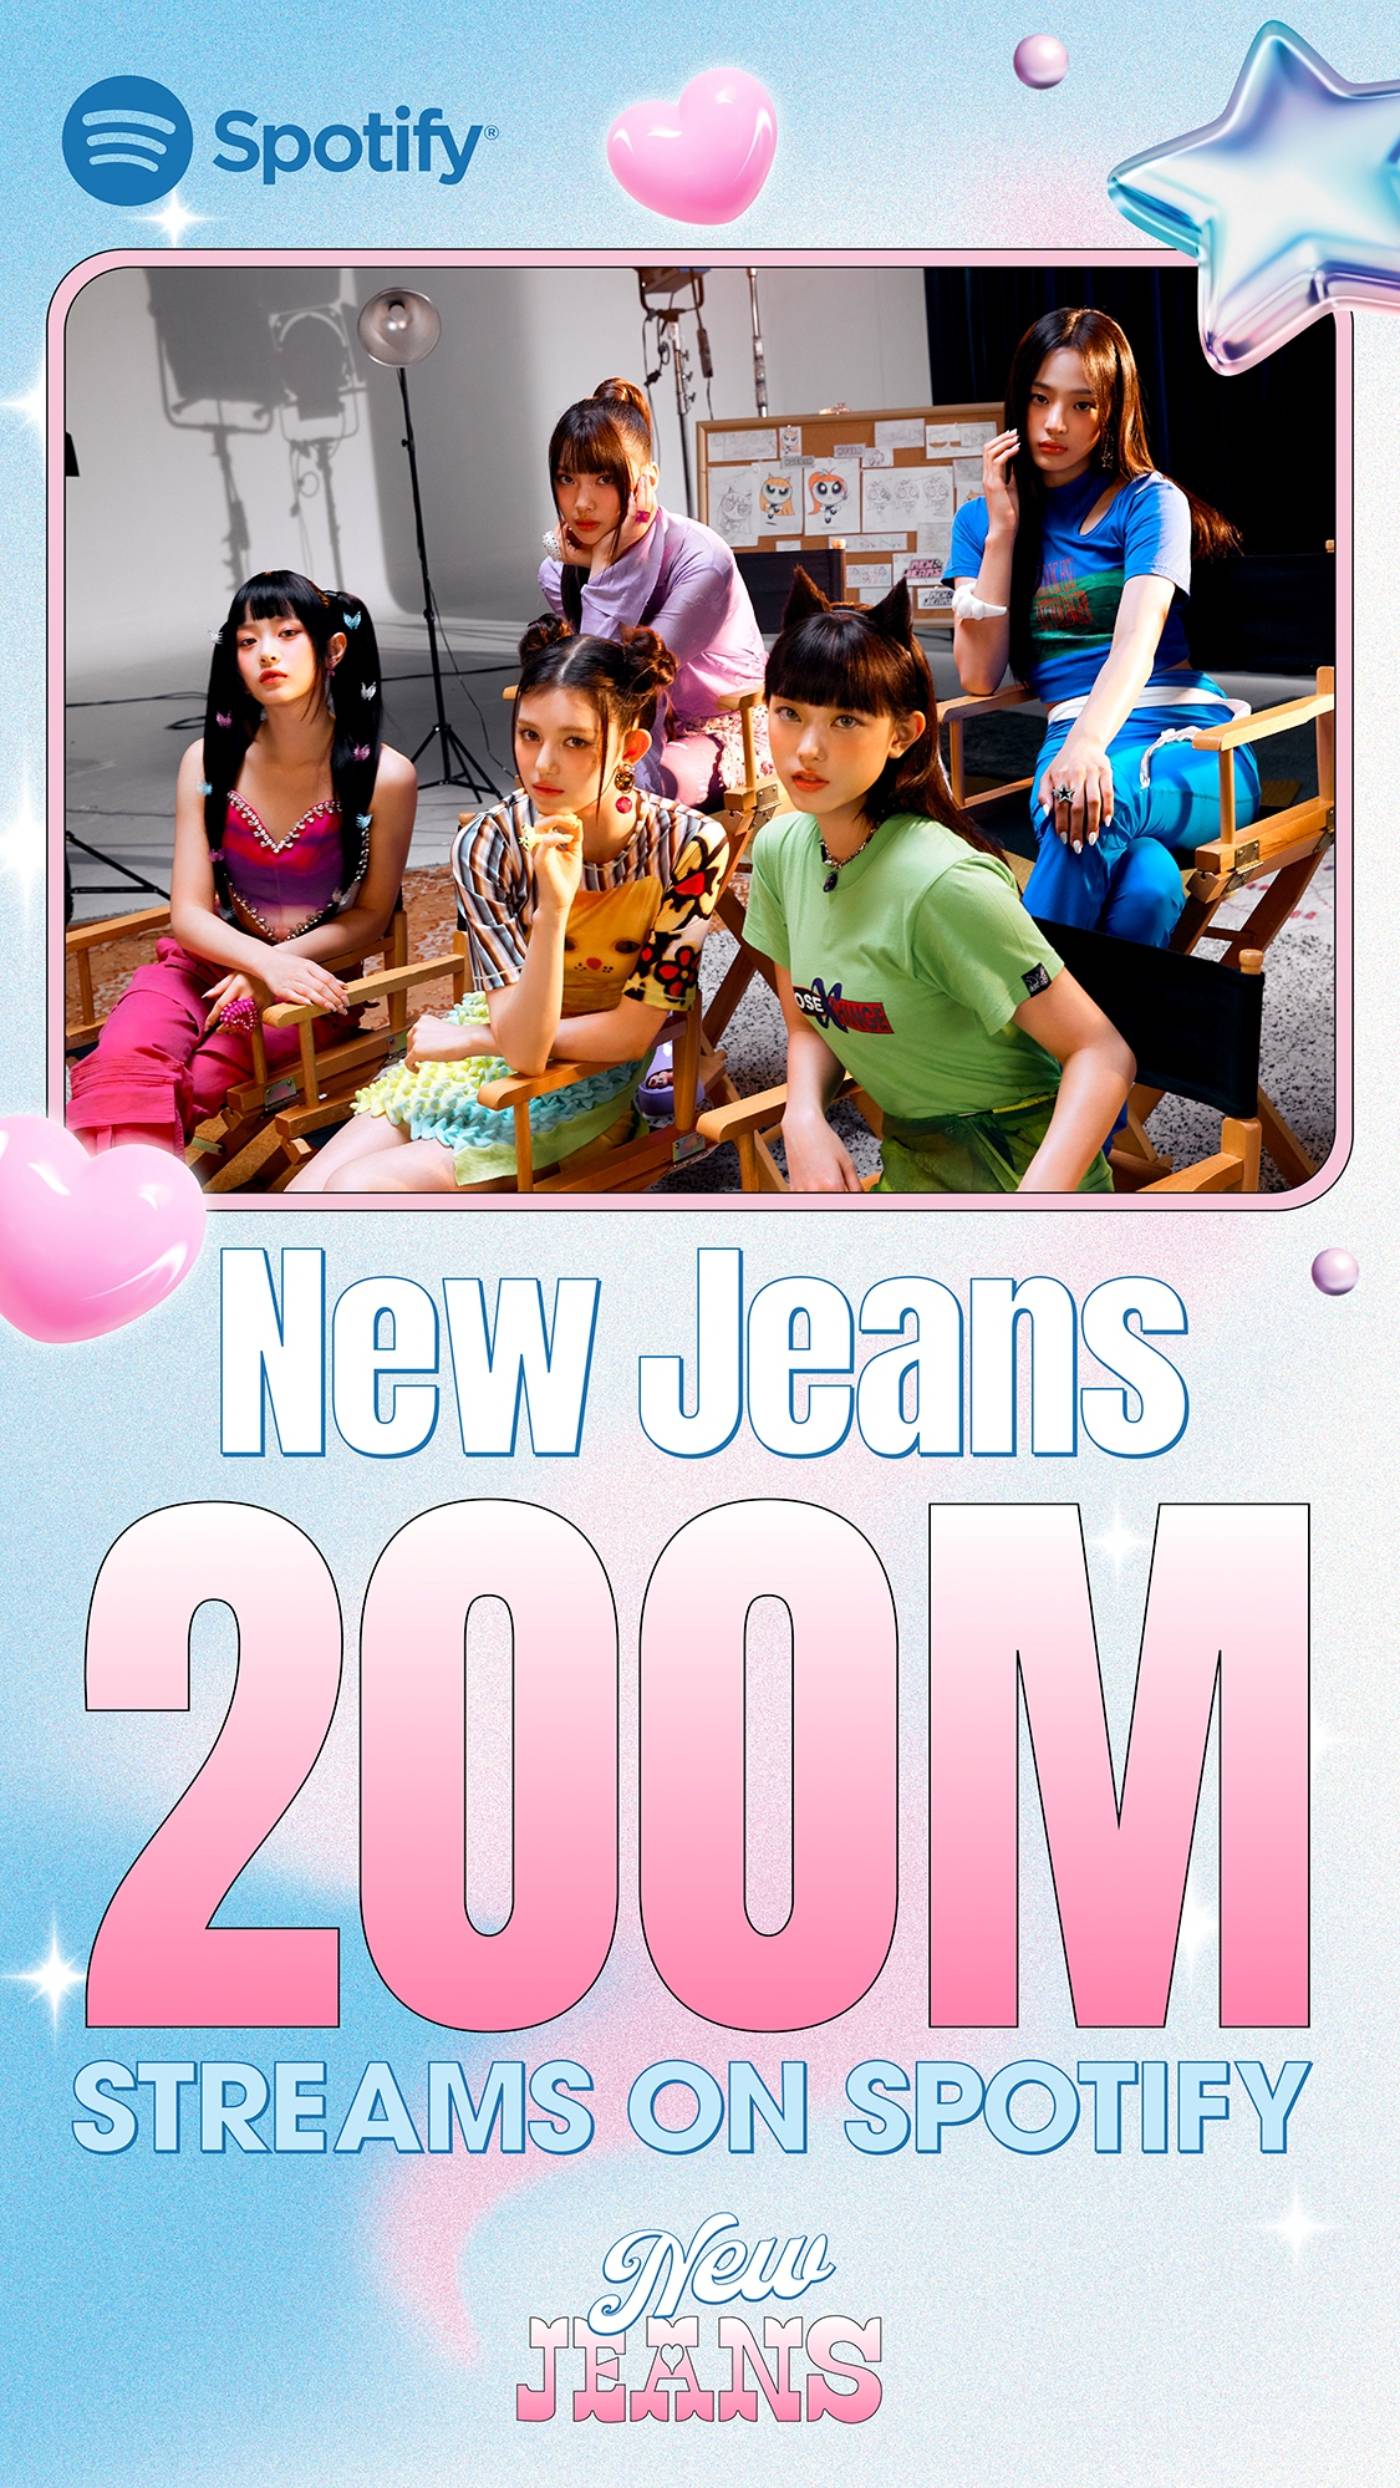 NewJeansの楽曲「New Jeans」Spotifyで累計再生数2億回を突破！ 『パワーパフガールズ』とコラボしたMVが話題 - 画像一覧（1/1）